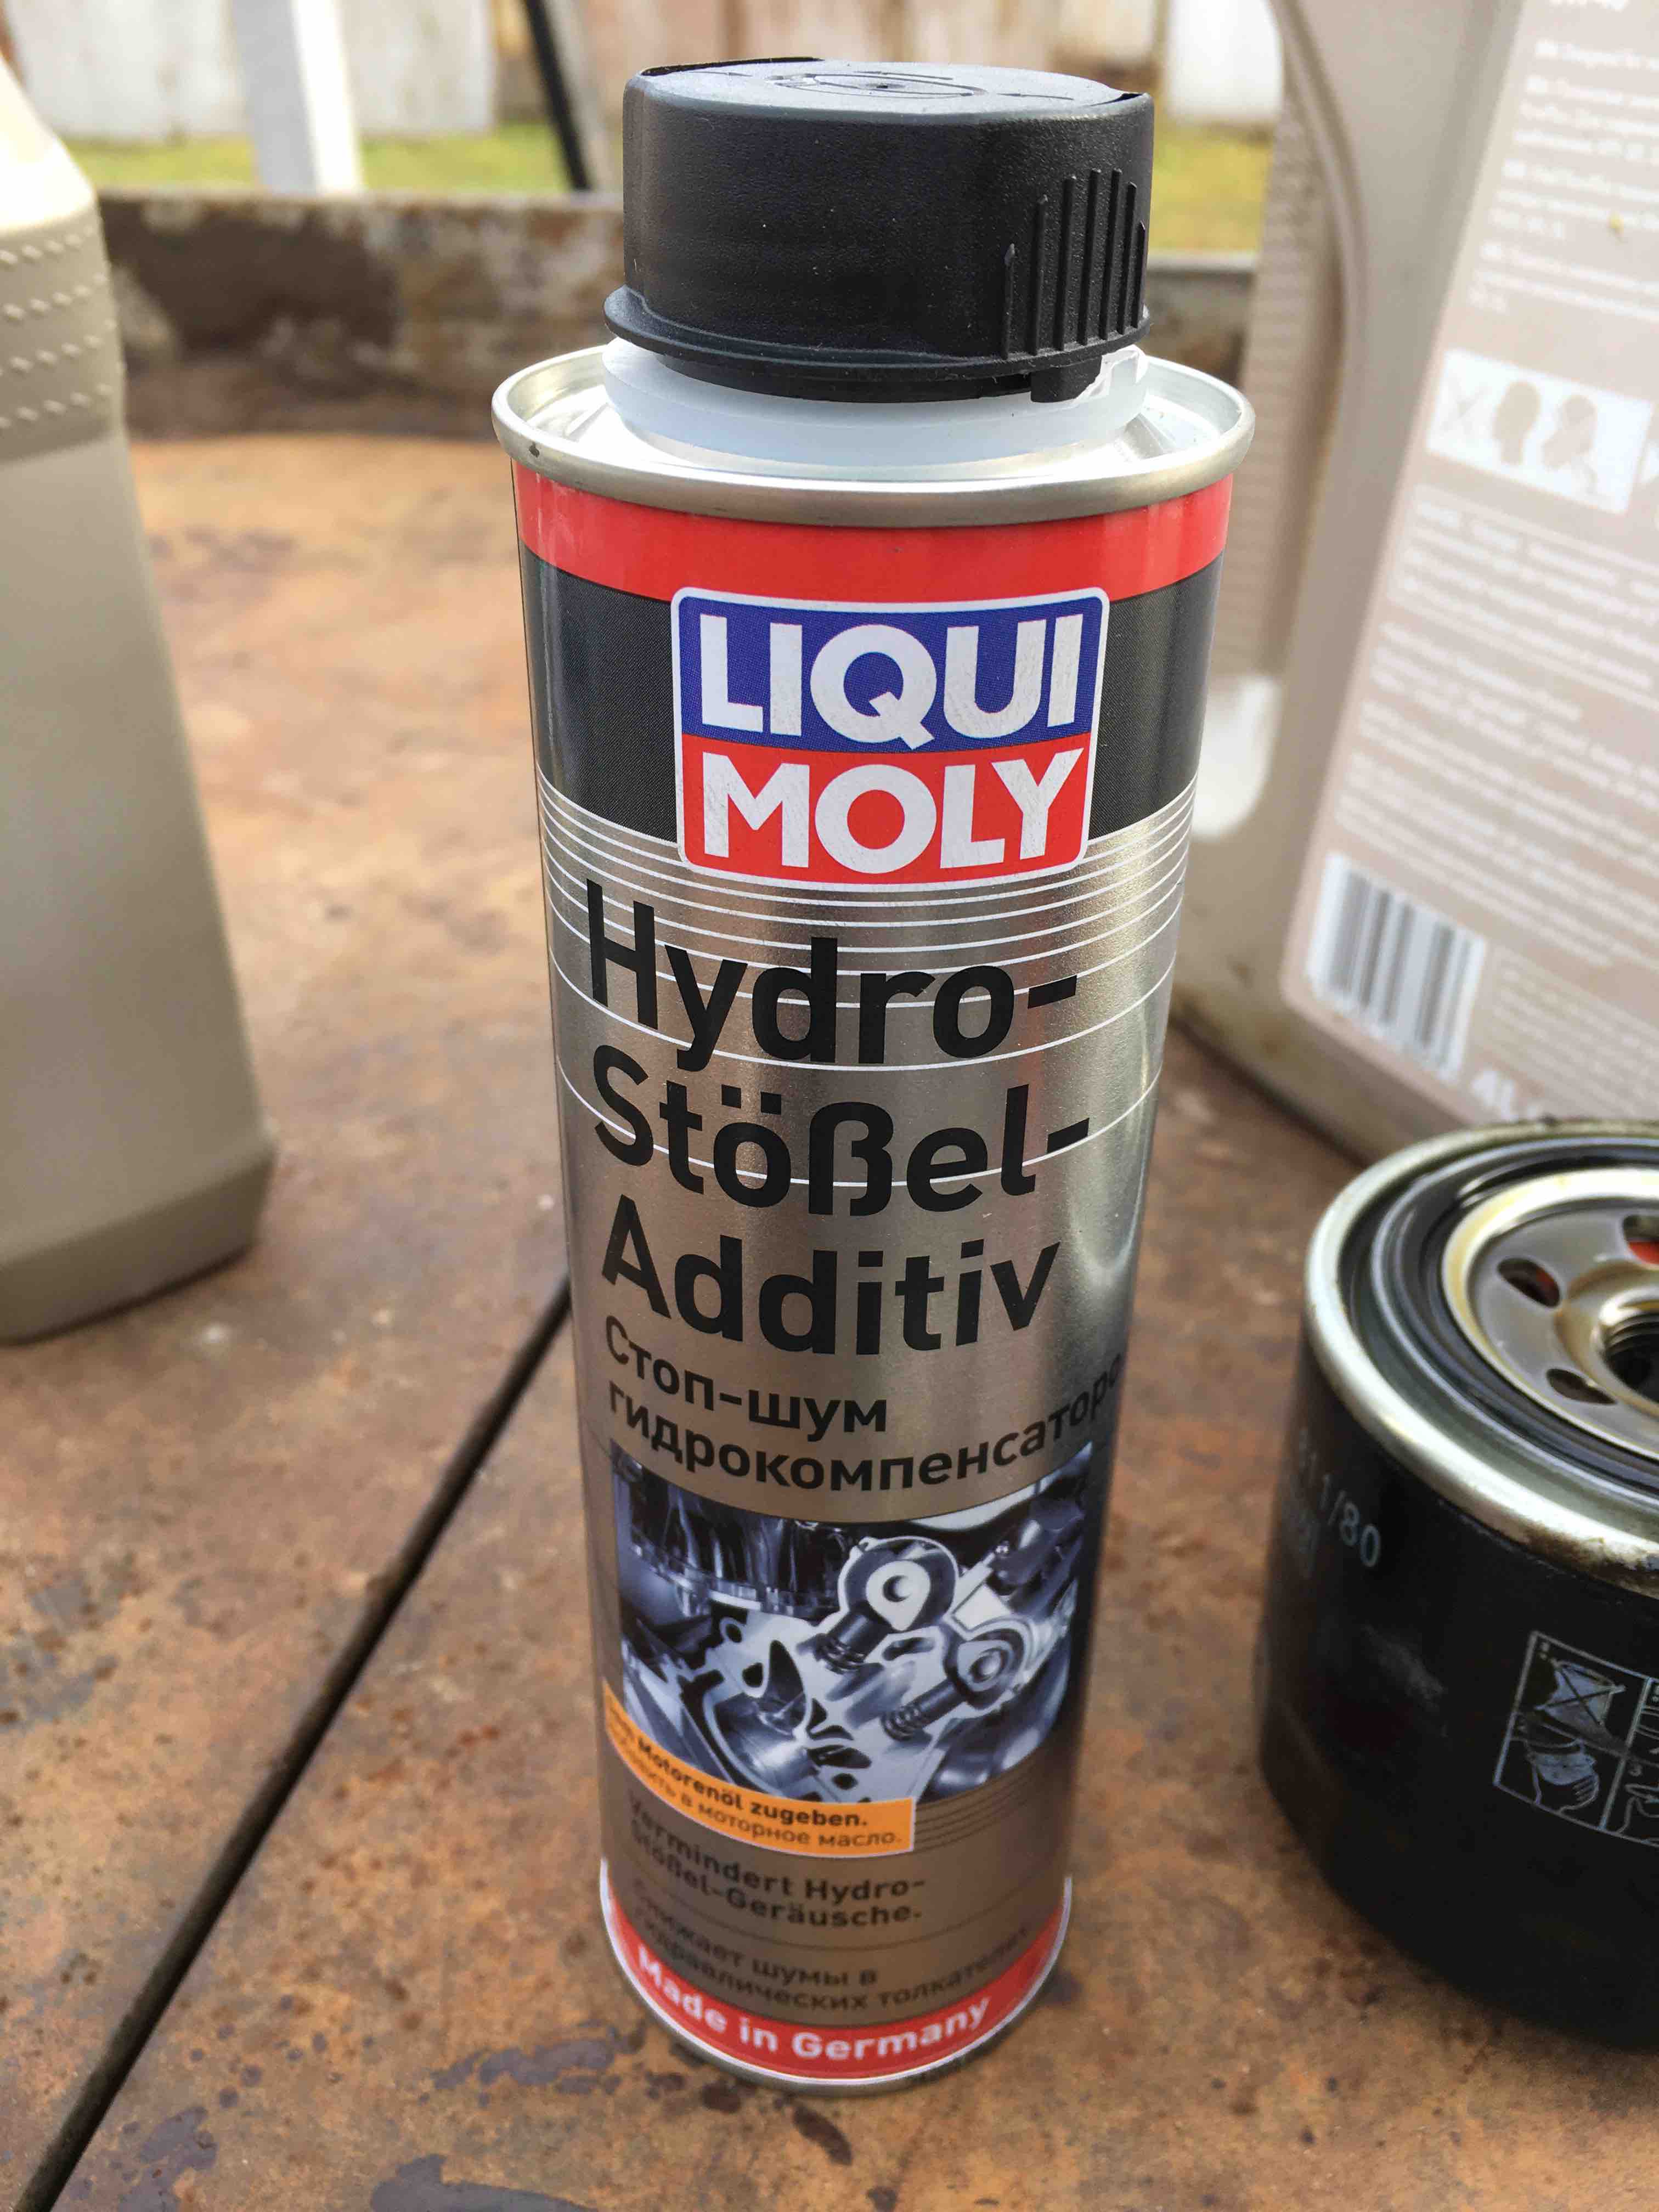 Liqui moly hydro stossel additiv